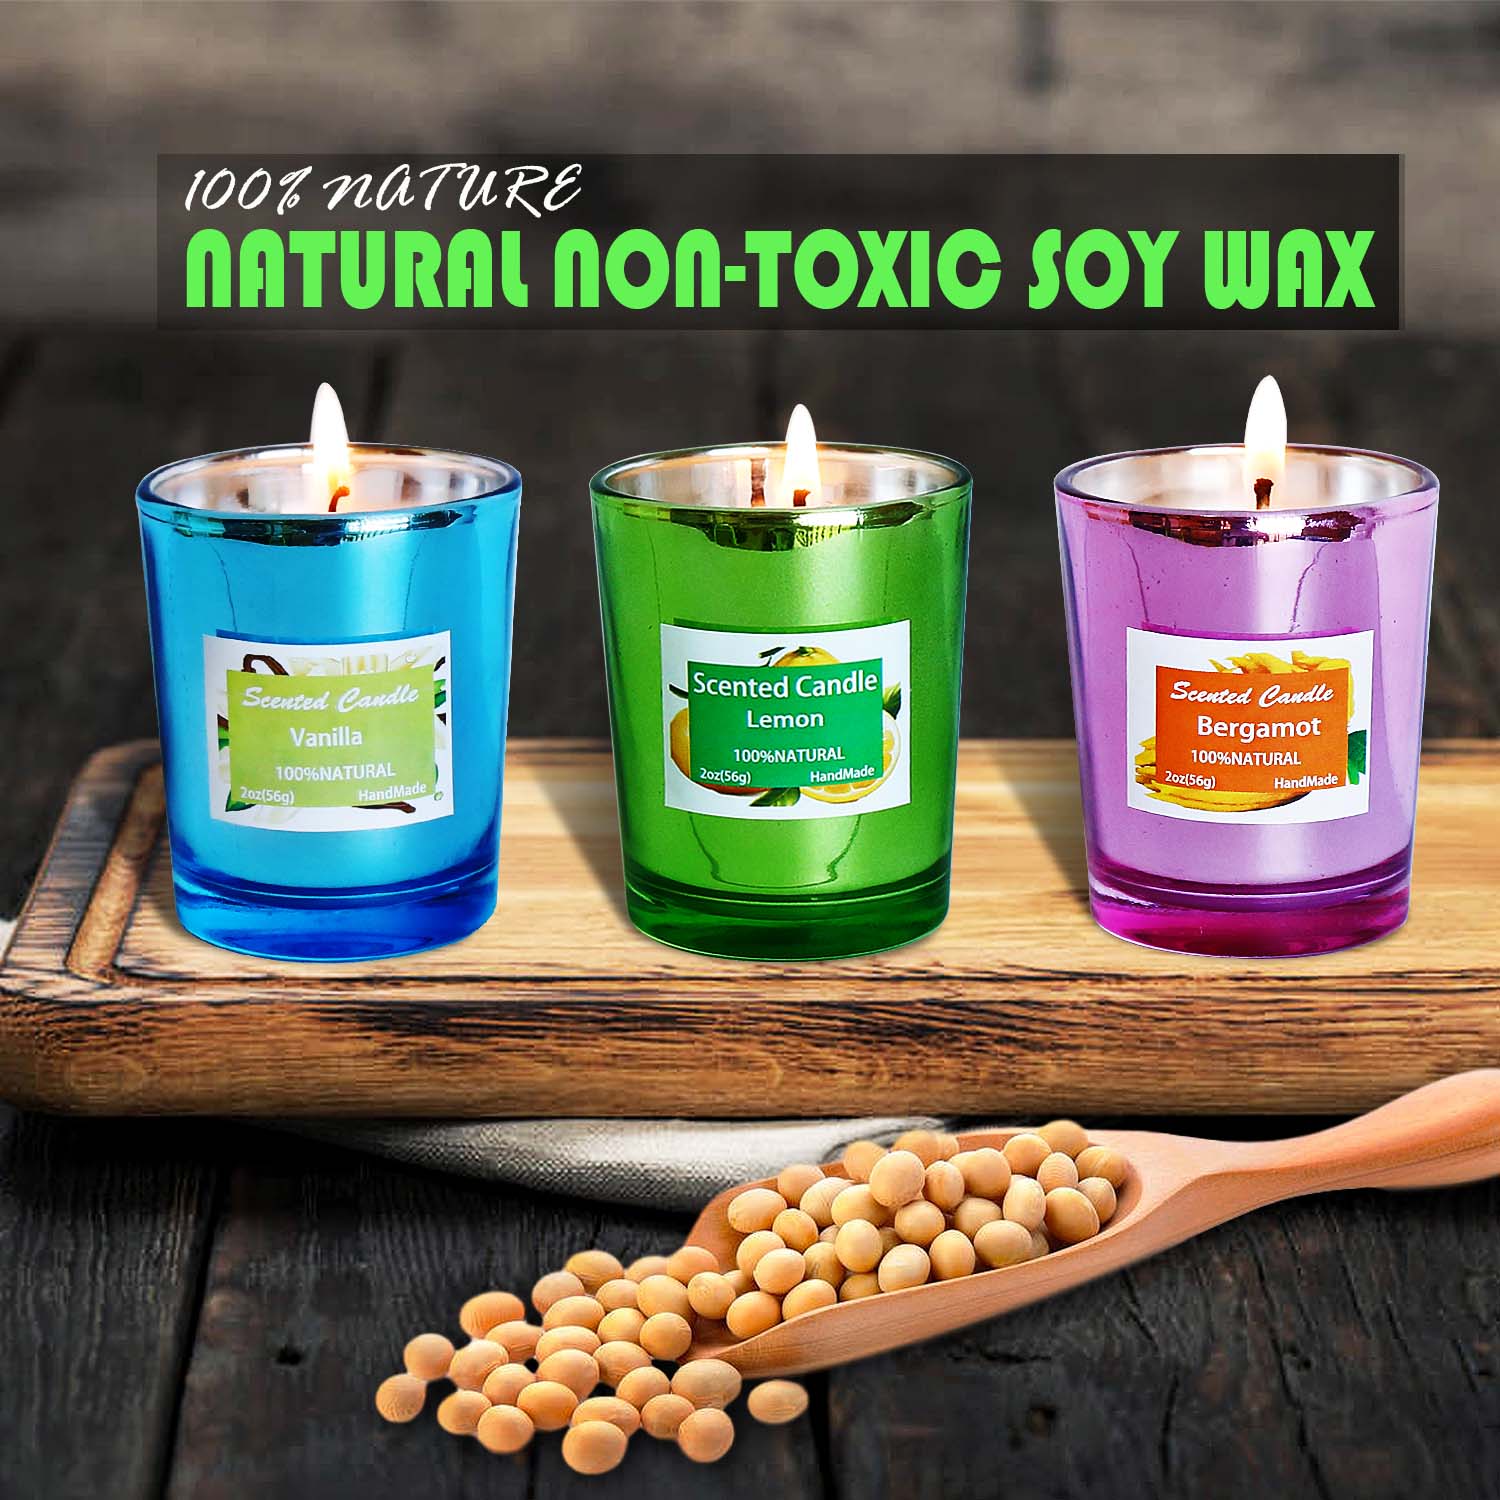 Shop For Natural Non-Toxic Candles